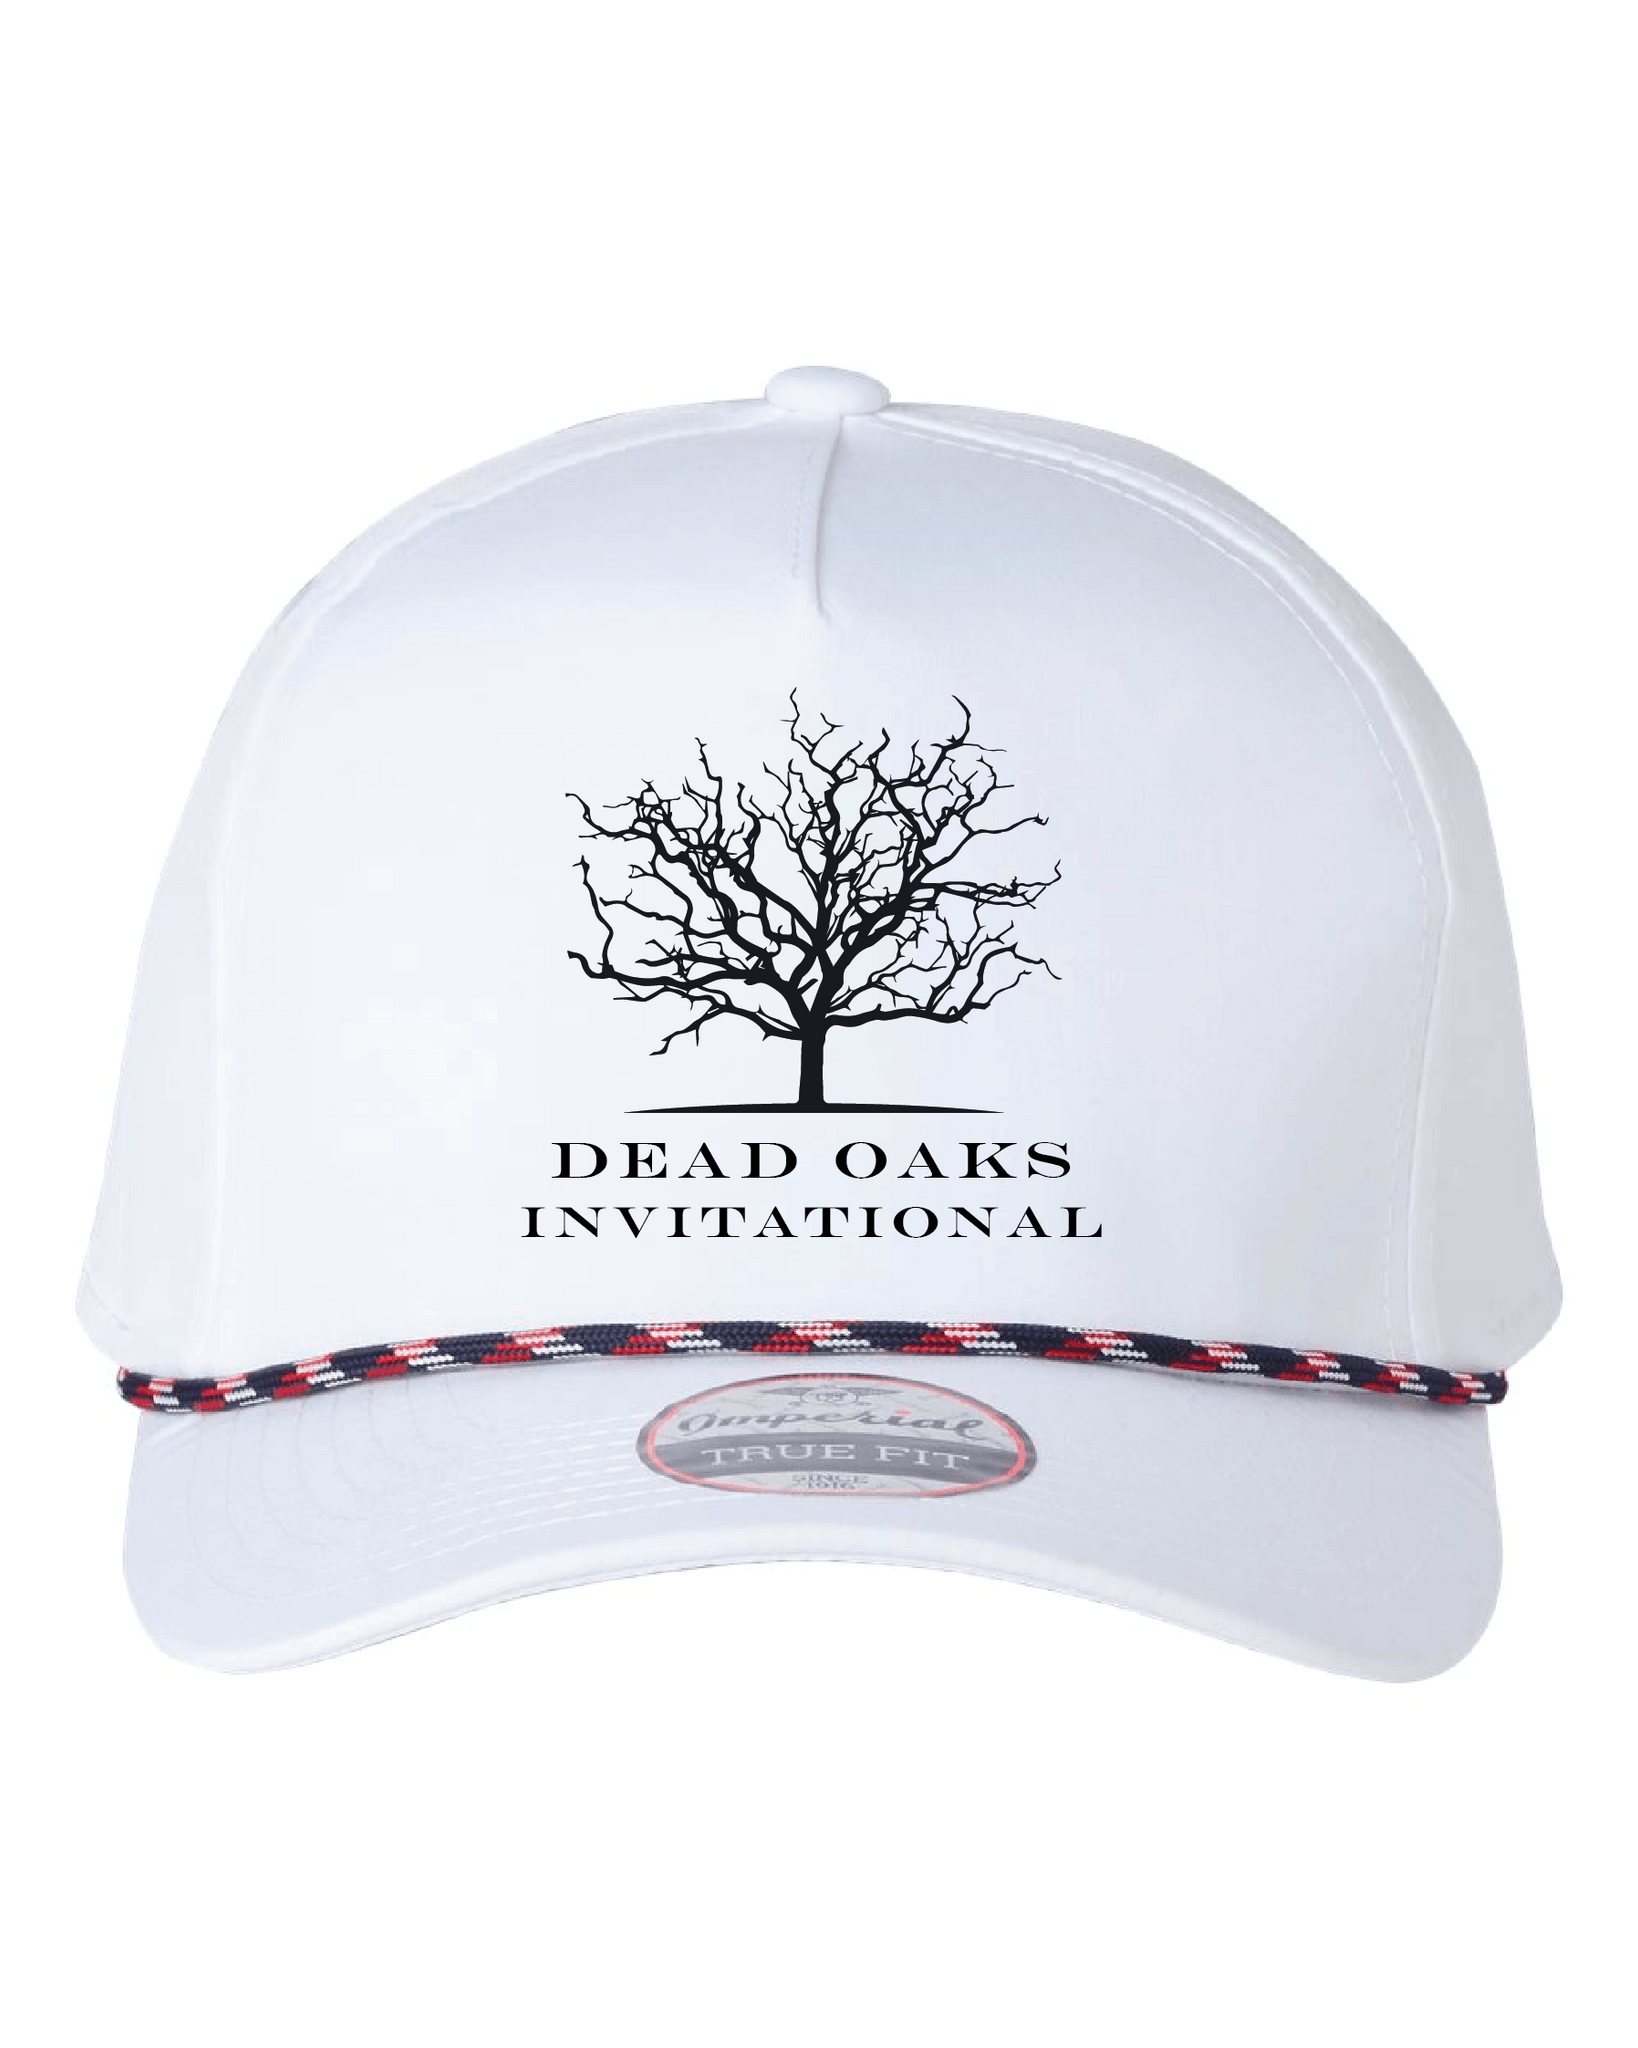 Imperial Golf Hat Dead Oaks Invitational